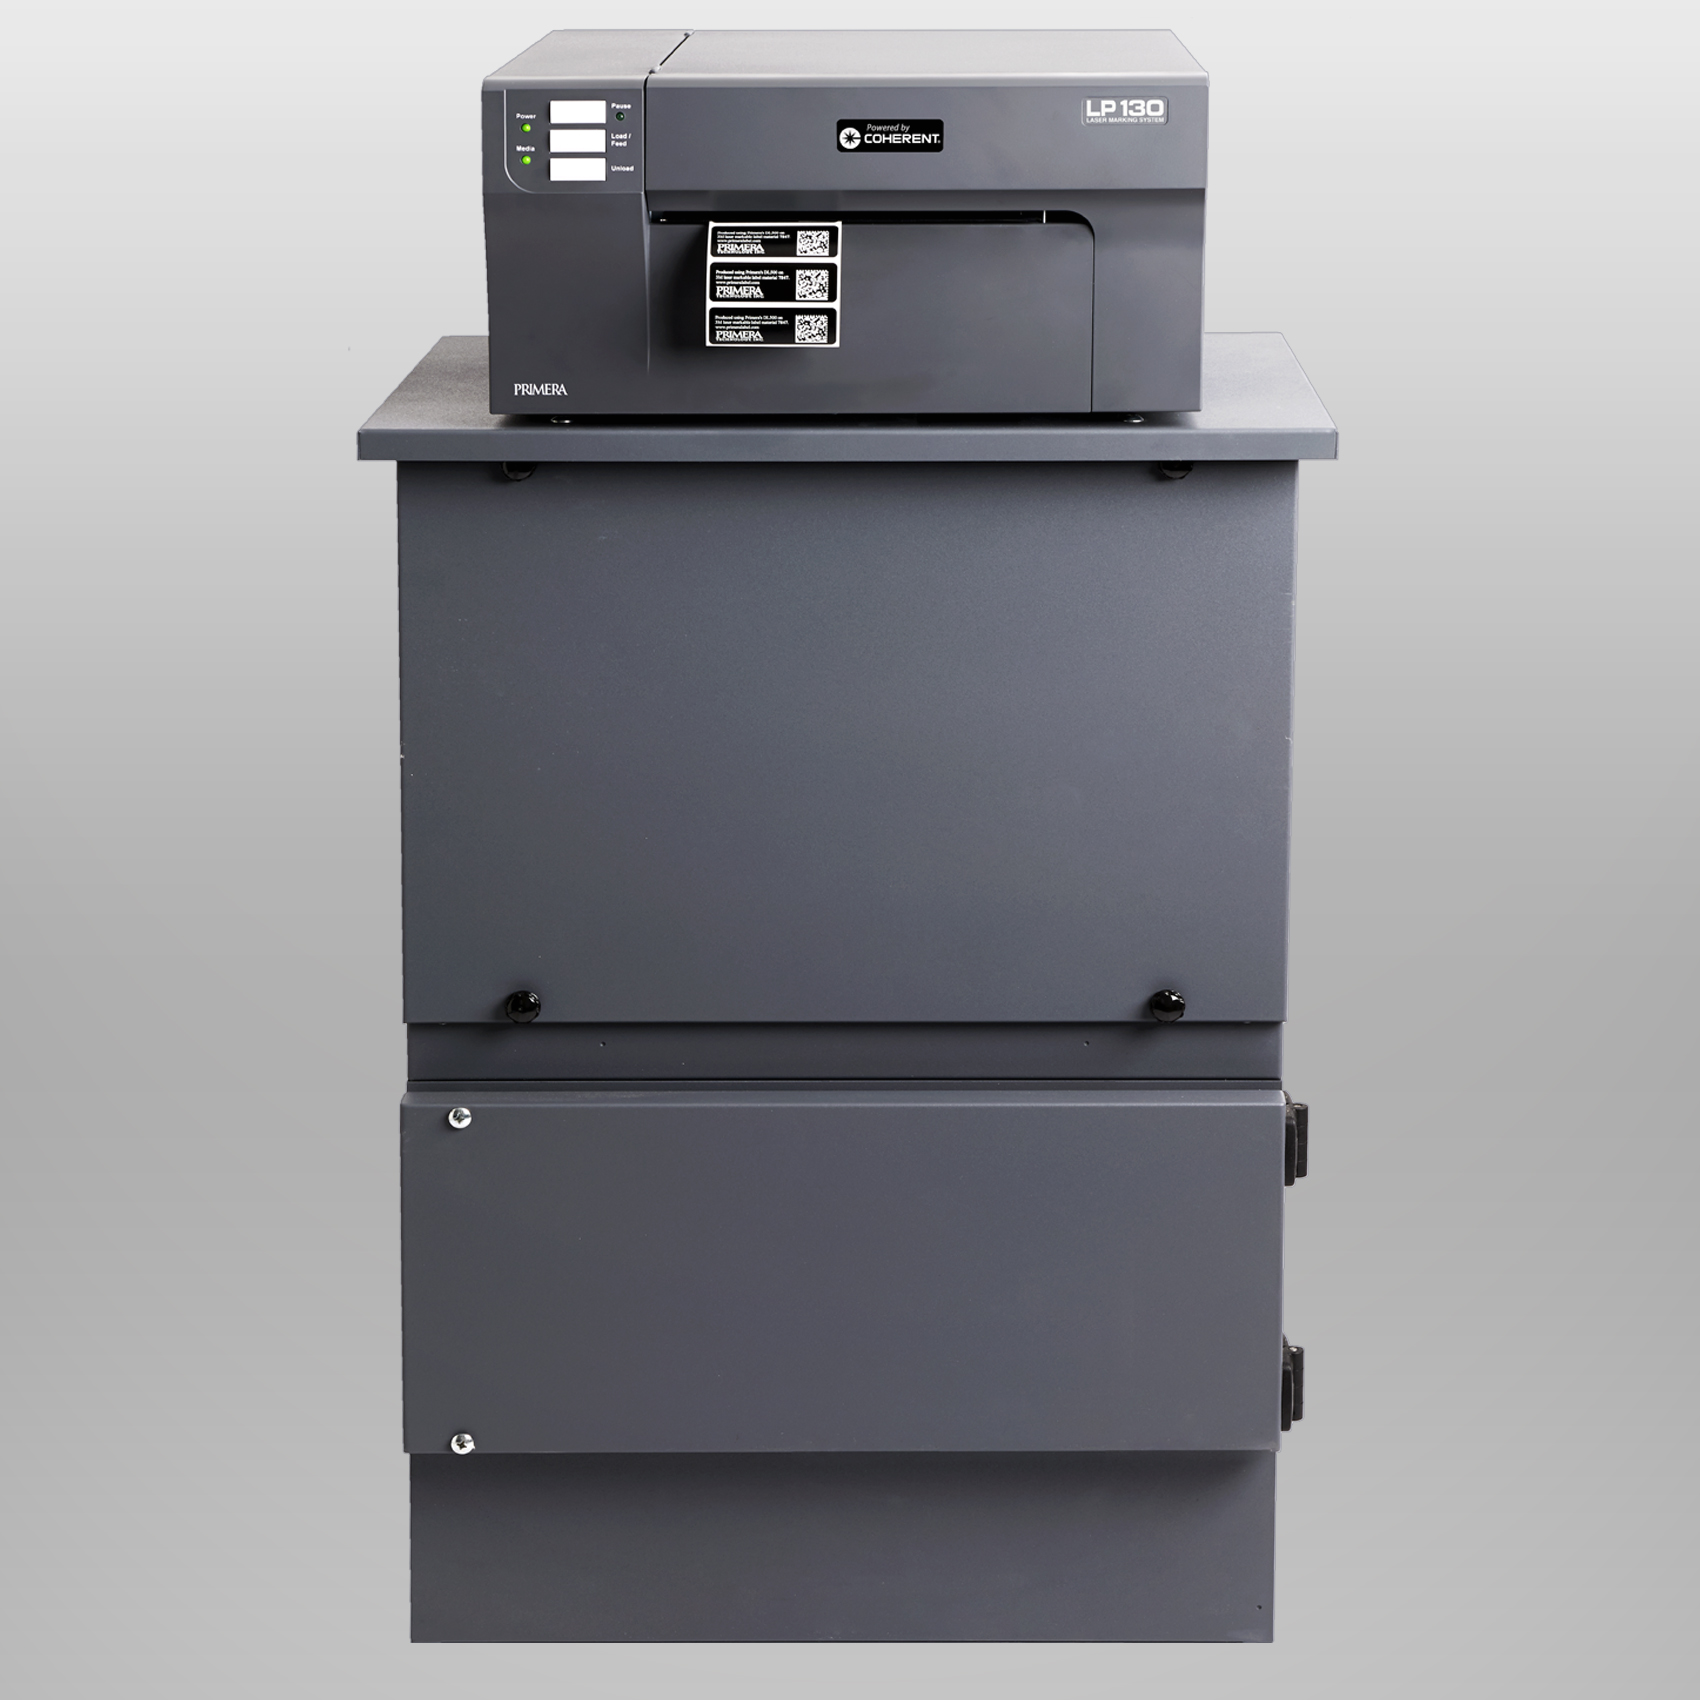 Primera LP130 Laser Marking System with optional air filtration system